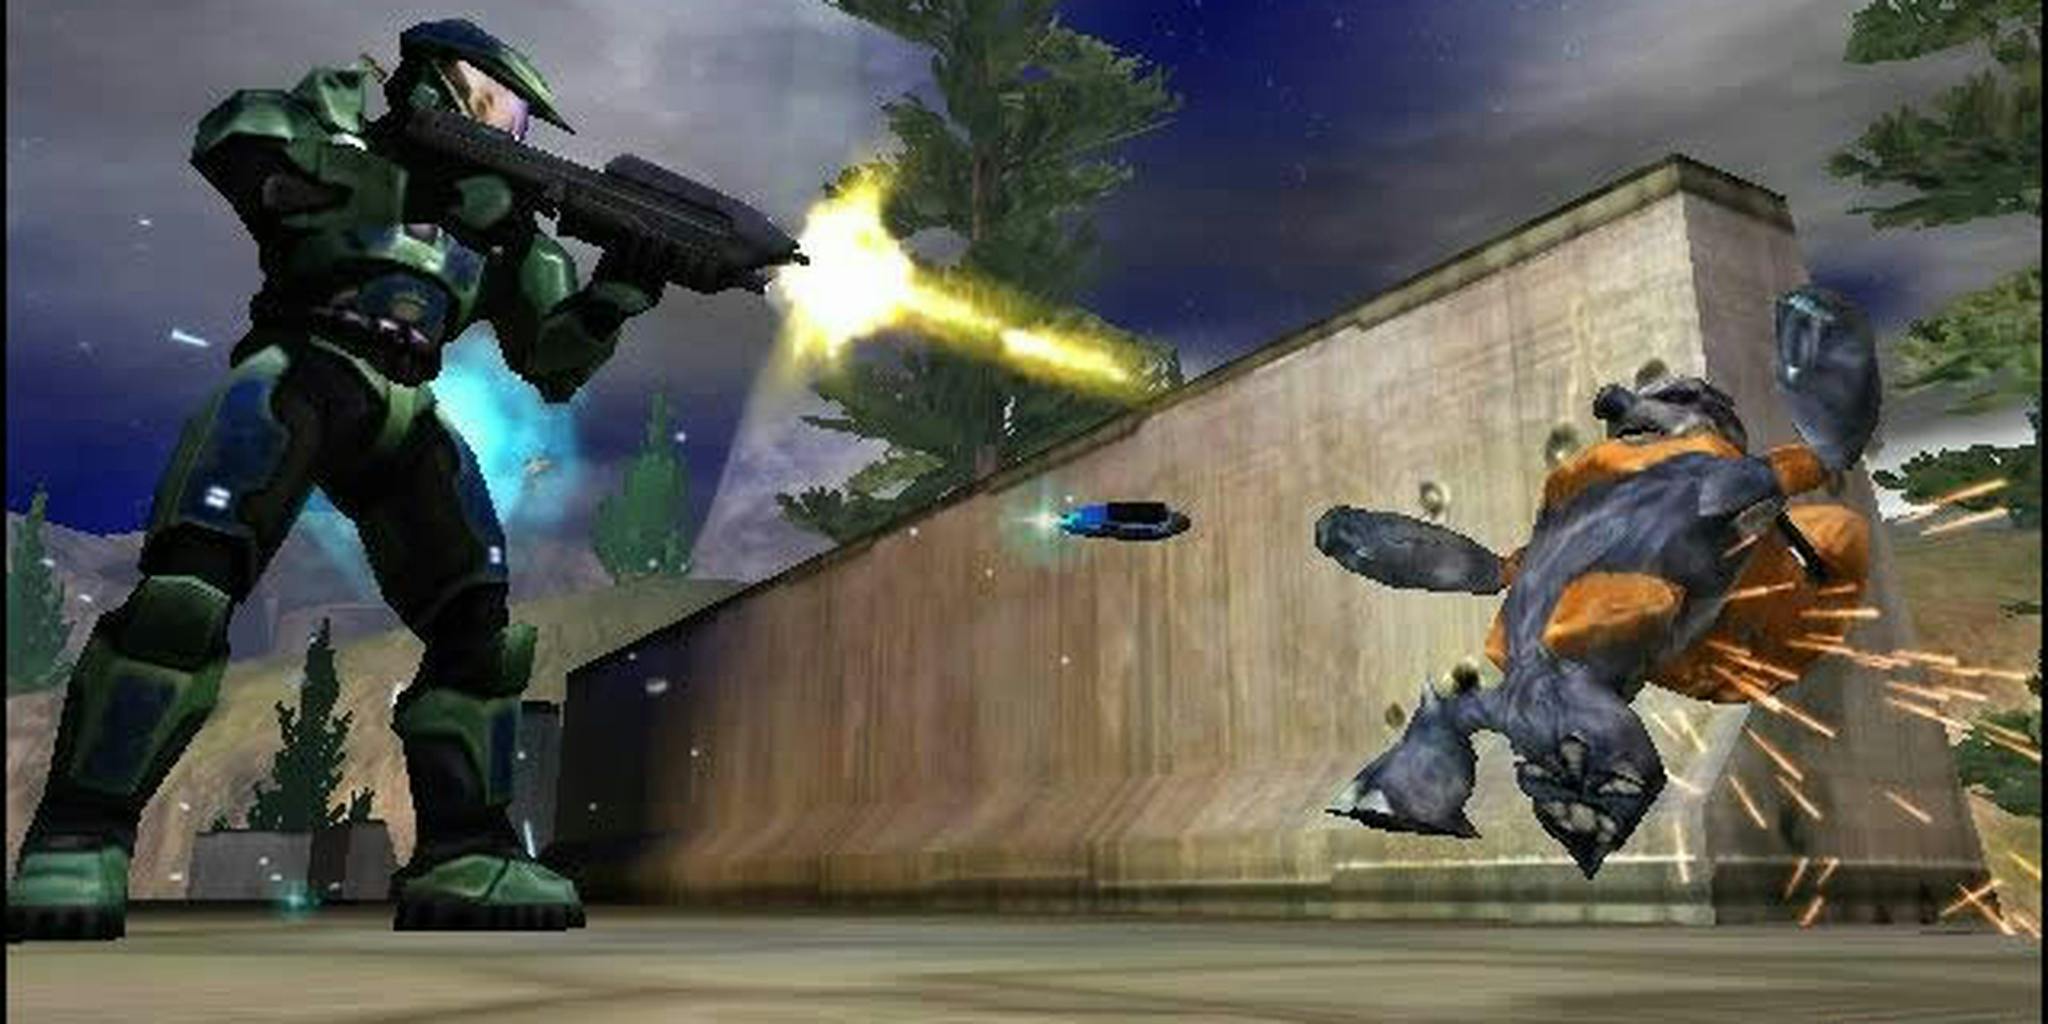 Halo: Combat Evolved - Original Xbox Game